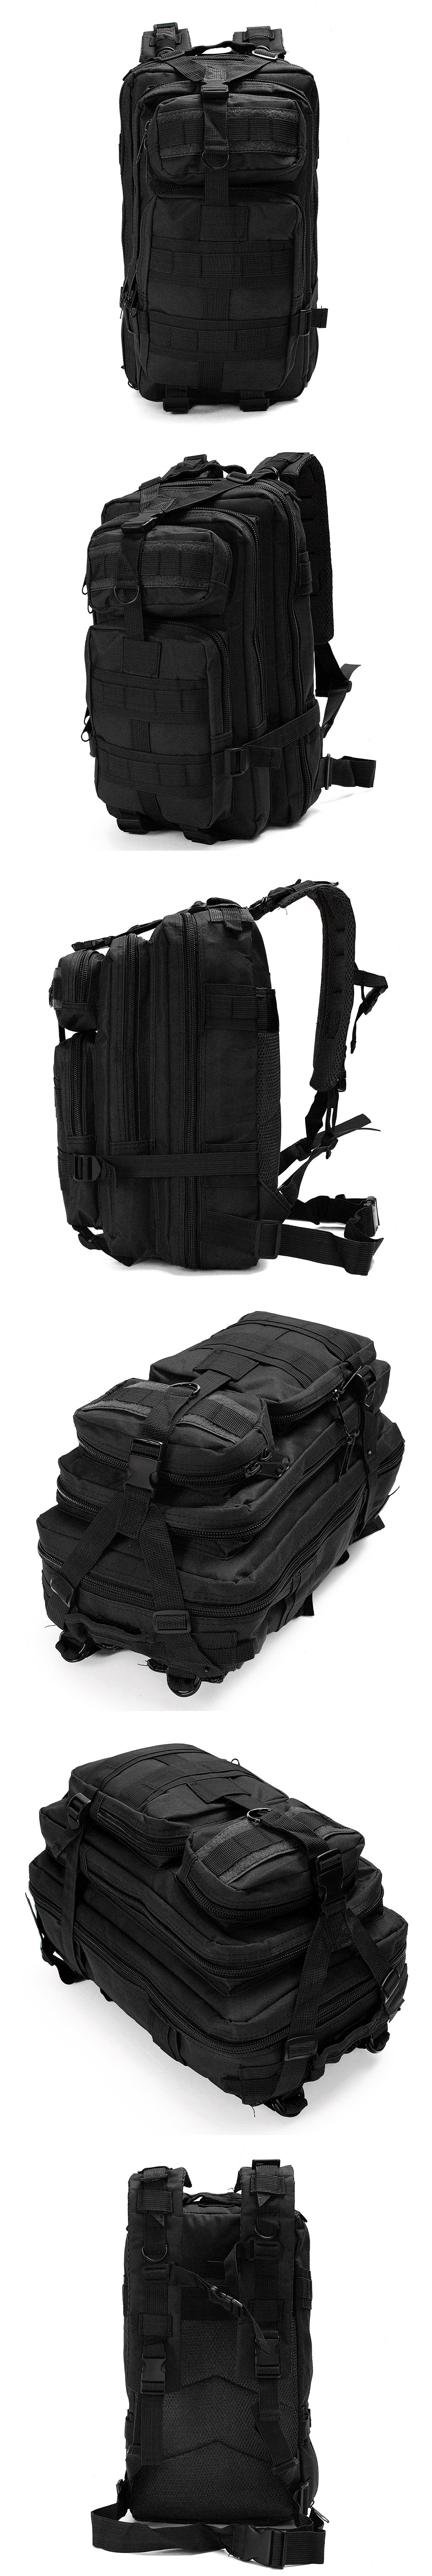 IPRee 30L Открытый Тактические Рюкзак Рюкзак Кемпинг Туризм треккинг мешок плеча пакет